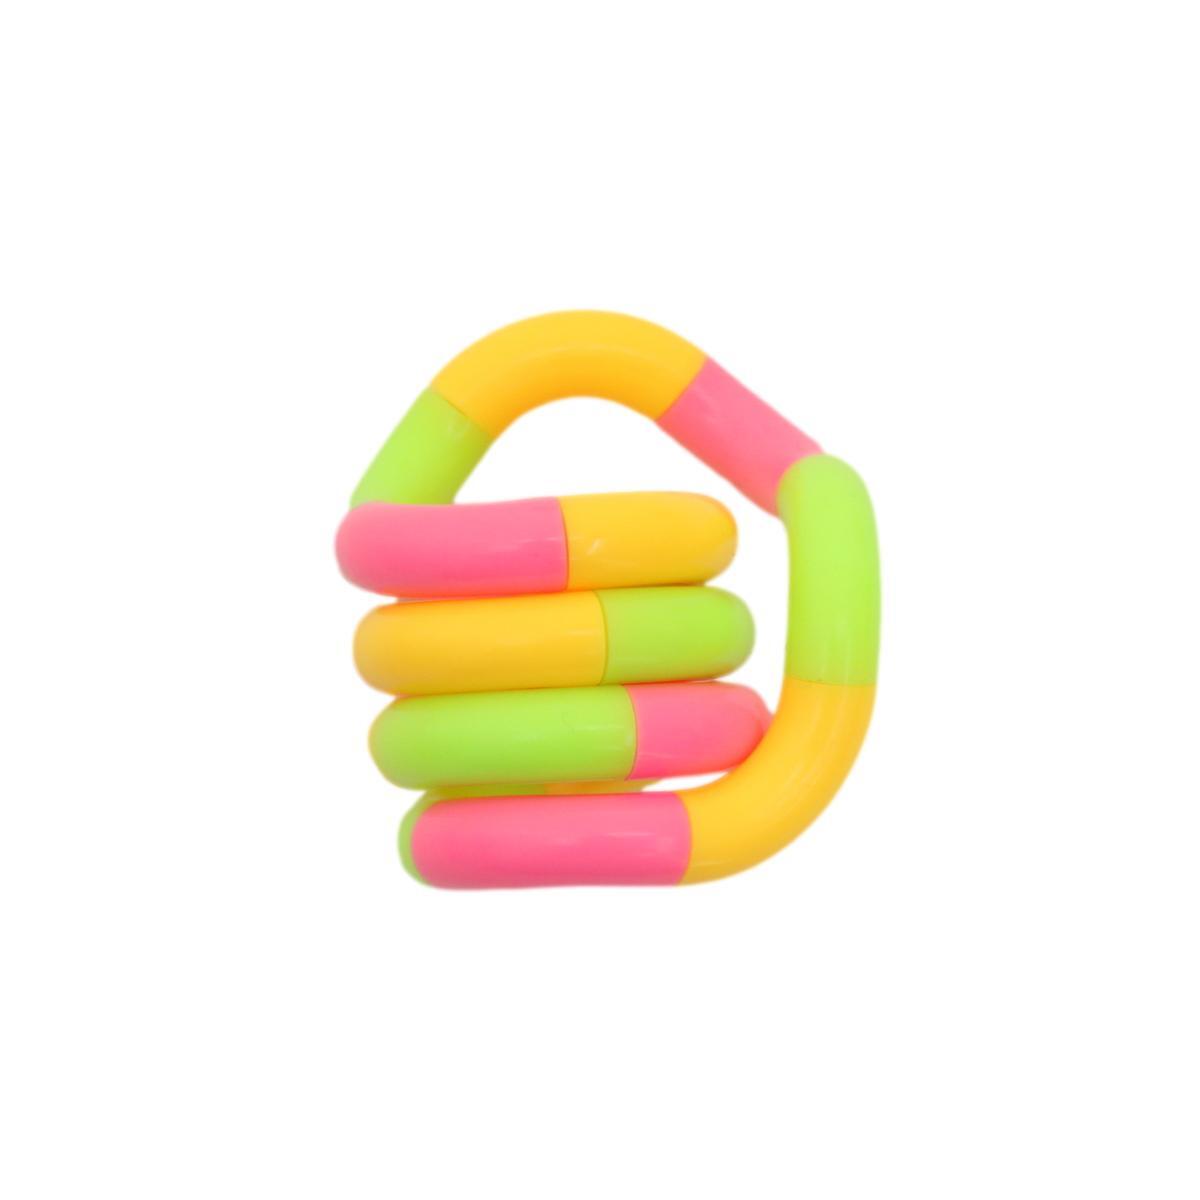 Fidget Toys Sensory ADHD Autism Stress Relief Hand Fidget Kids Adult 